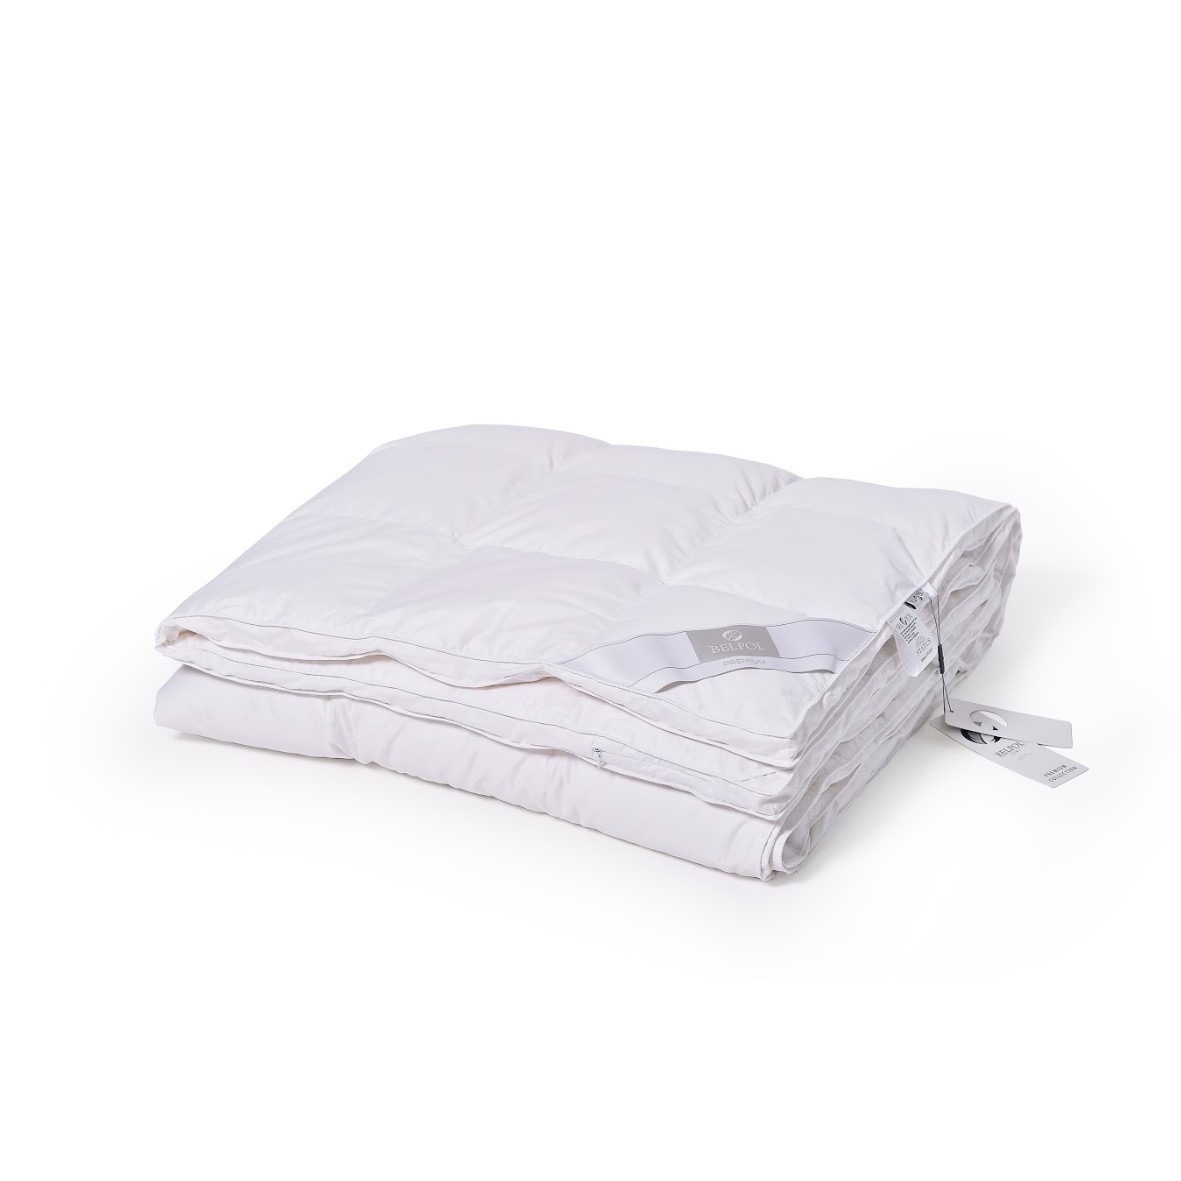 Одеяло Теплое Status (200х220 см), размер 200х220 см, цвет белый bp616362 Одеяло Теплое Status (200х220 см) - фото 1